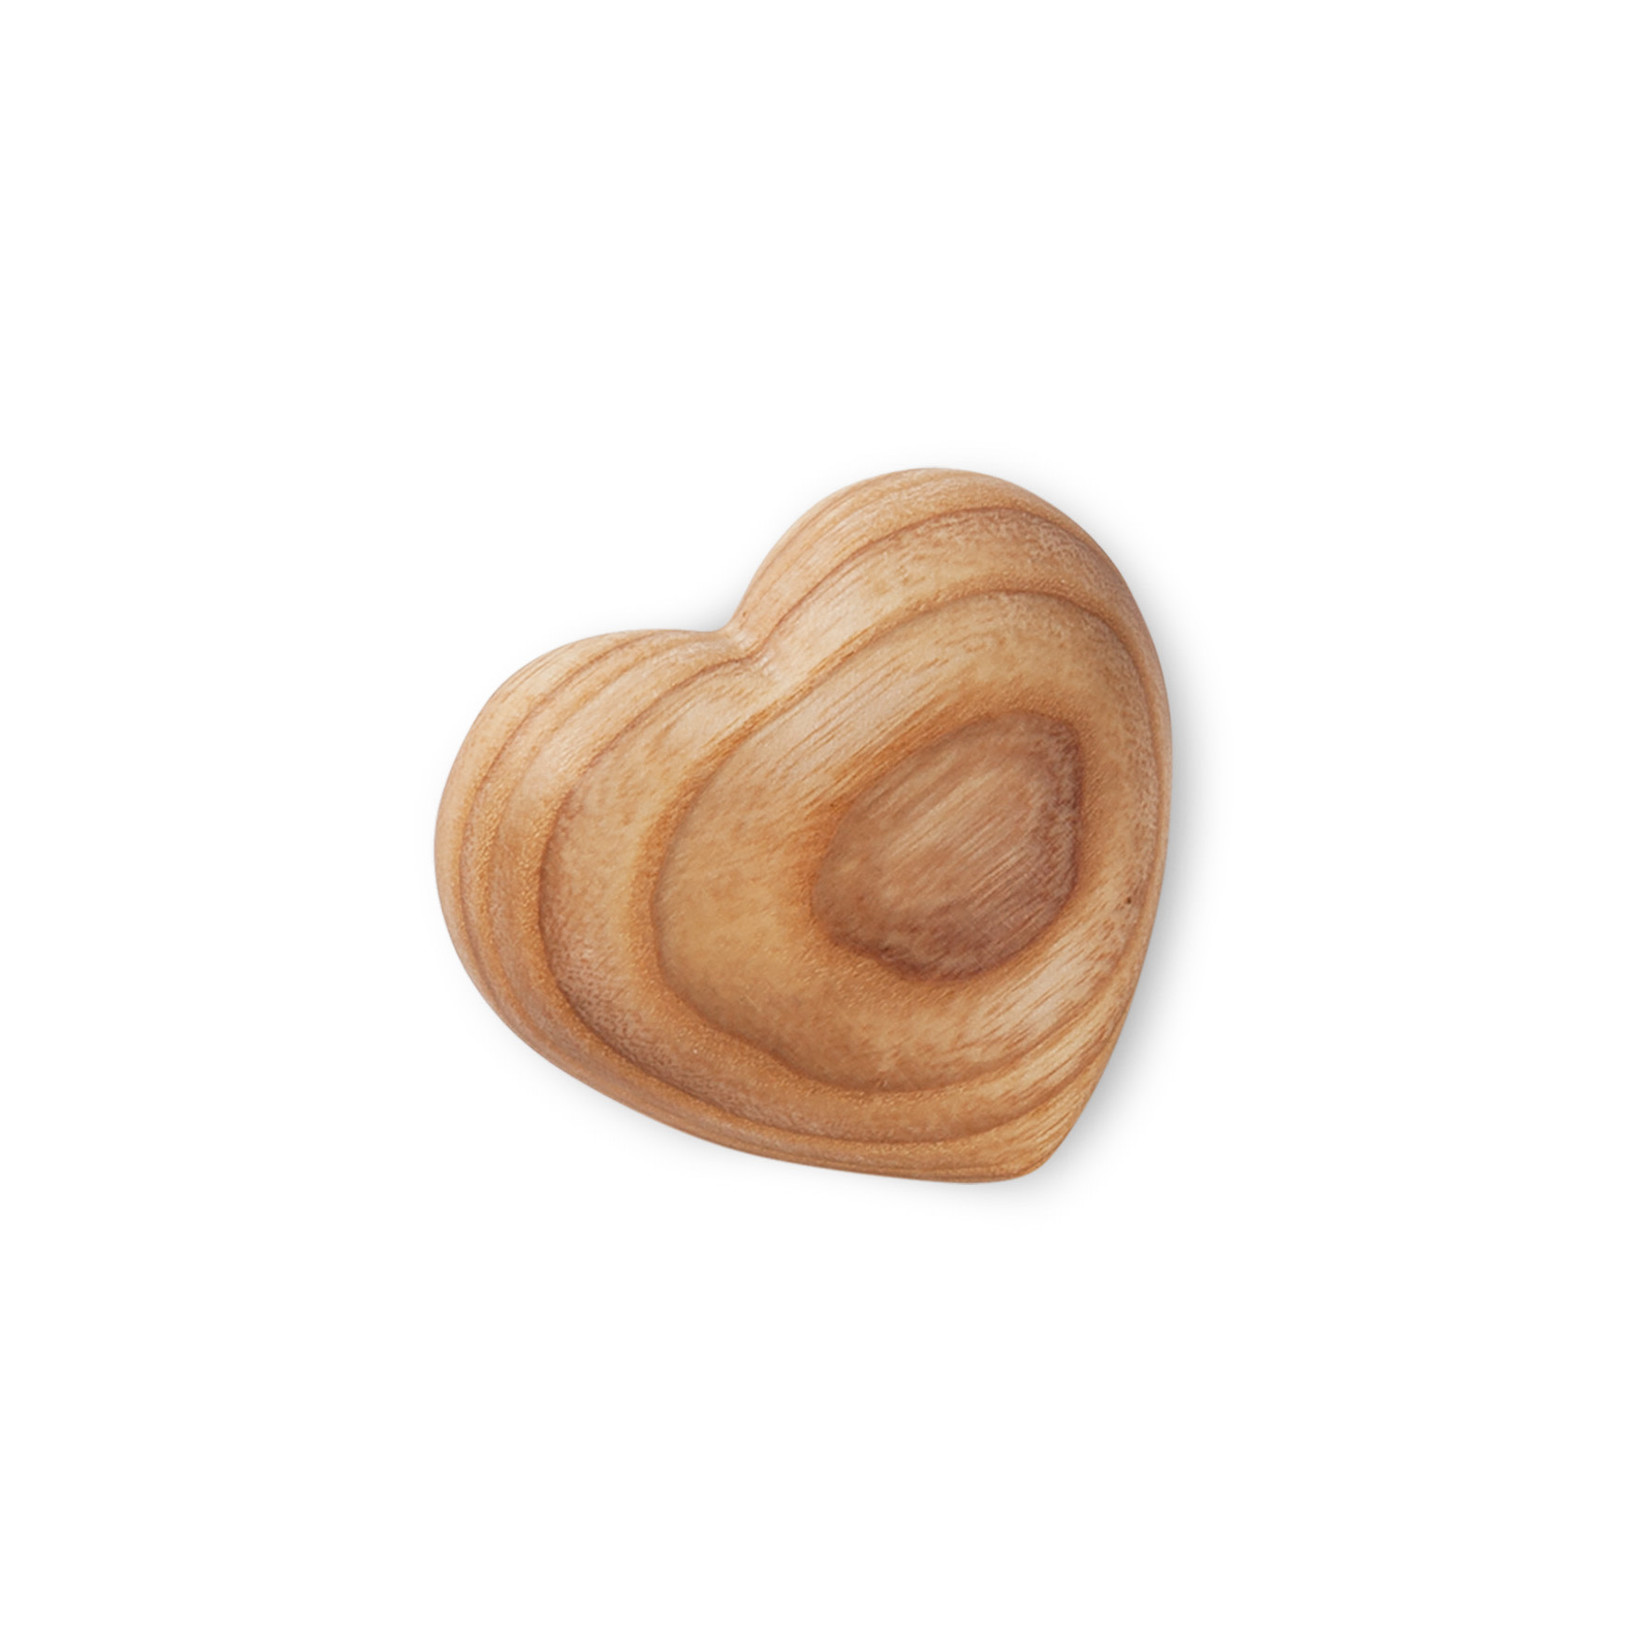 Waldfabrik Wood Heart - Smooth Size 1